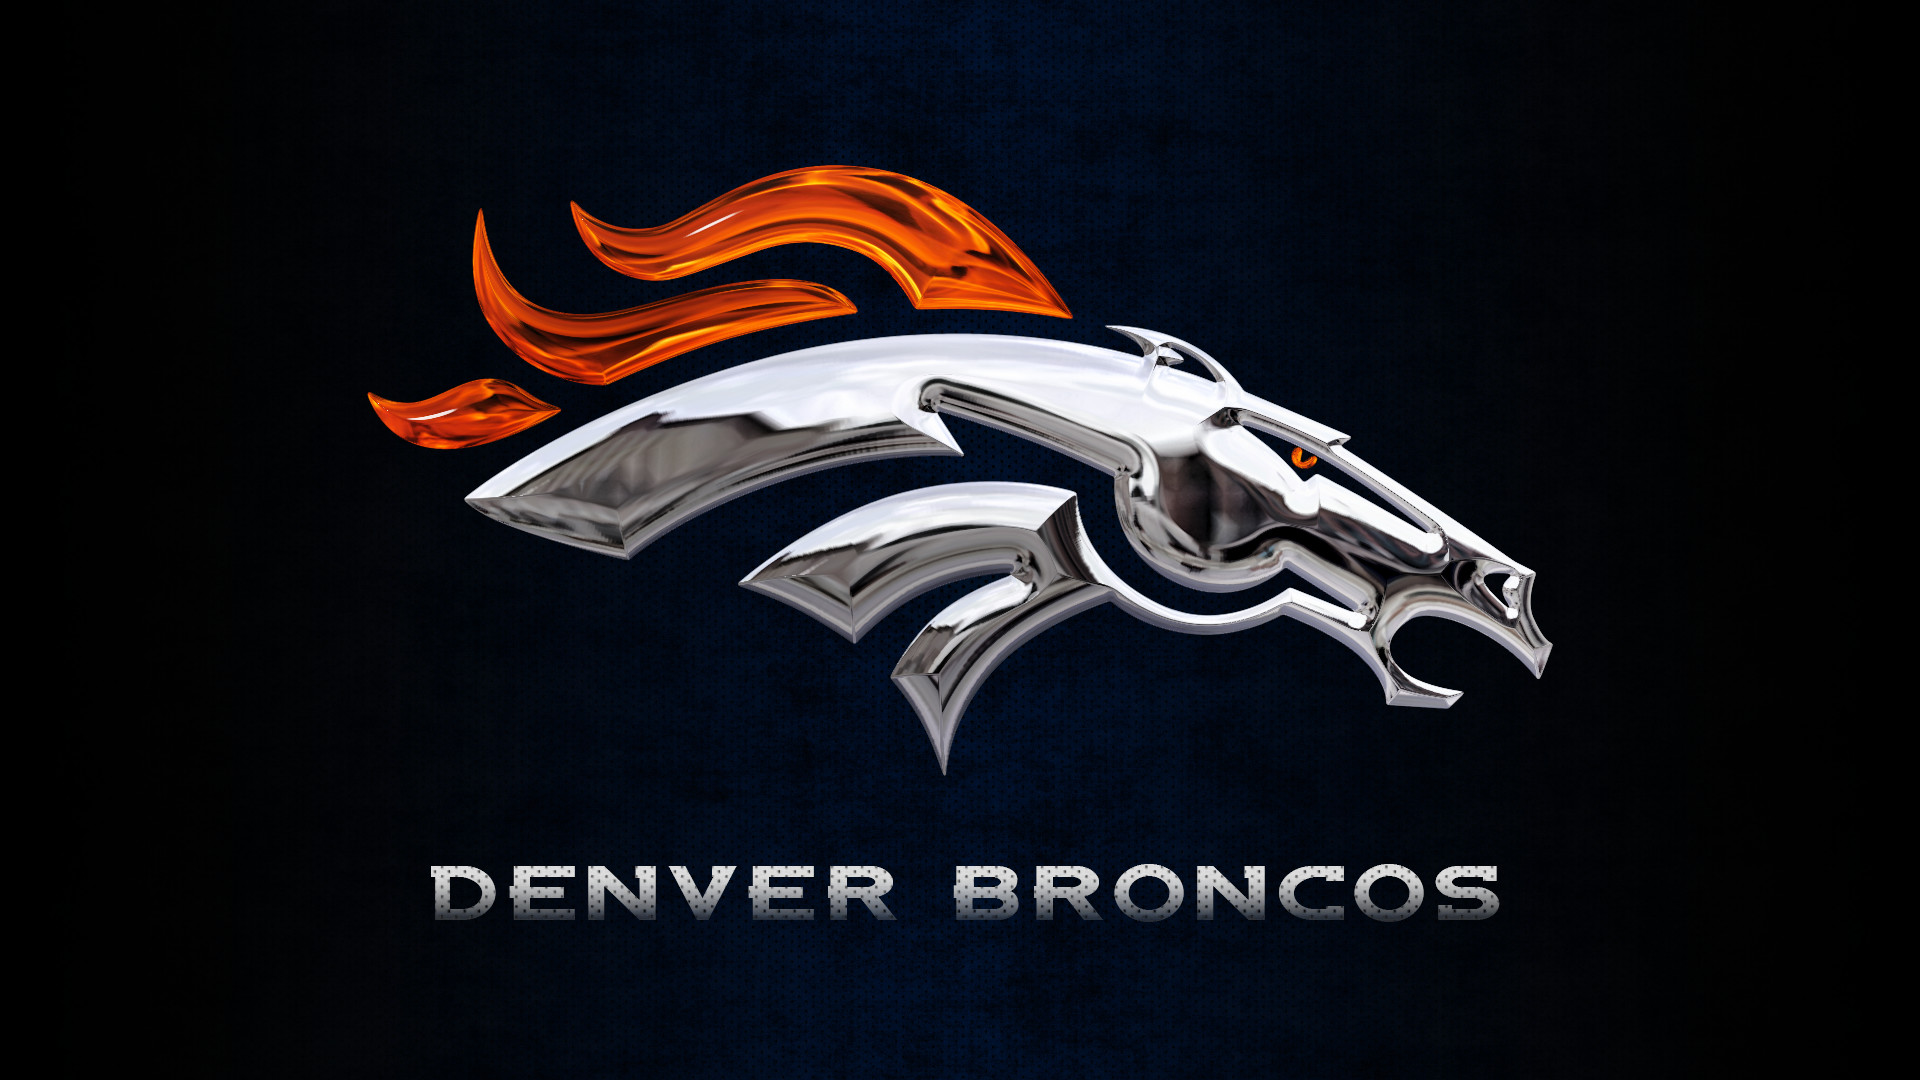 1920x1080 ... Denver Broncos Chrome Wallpaper by DenverSportsWalls